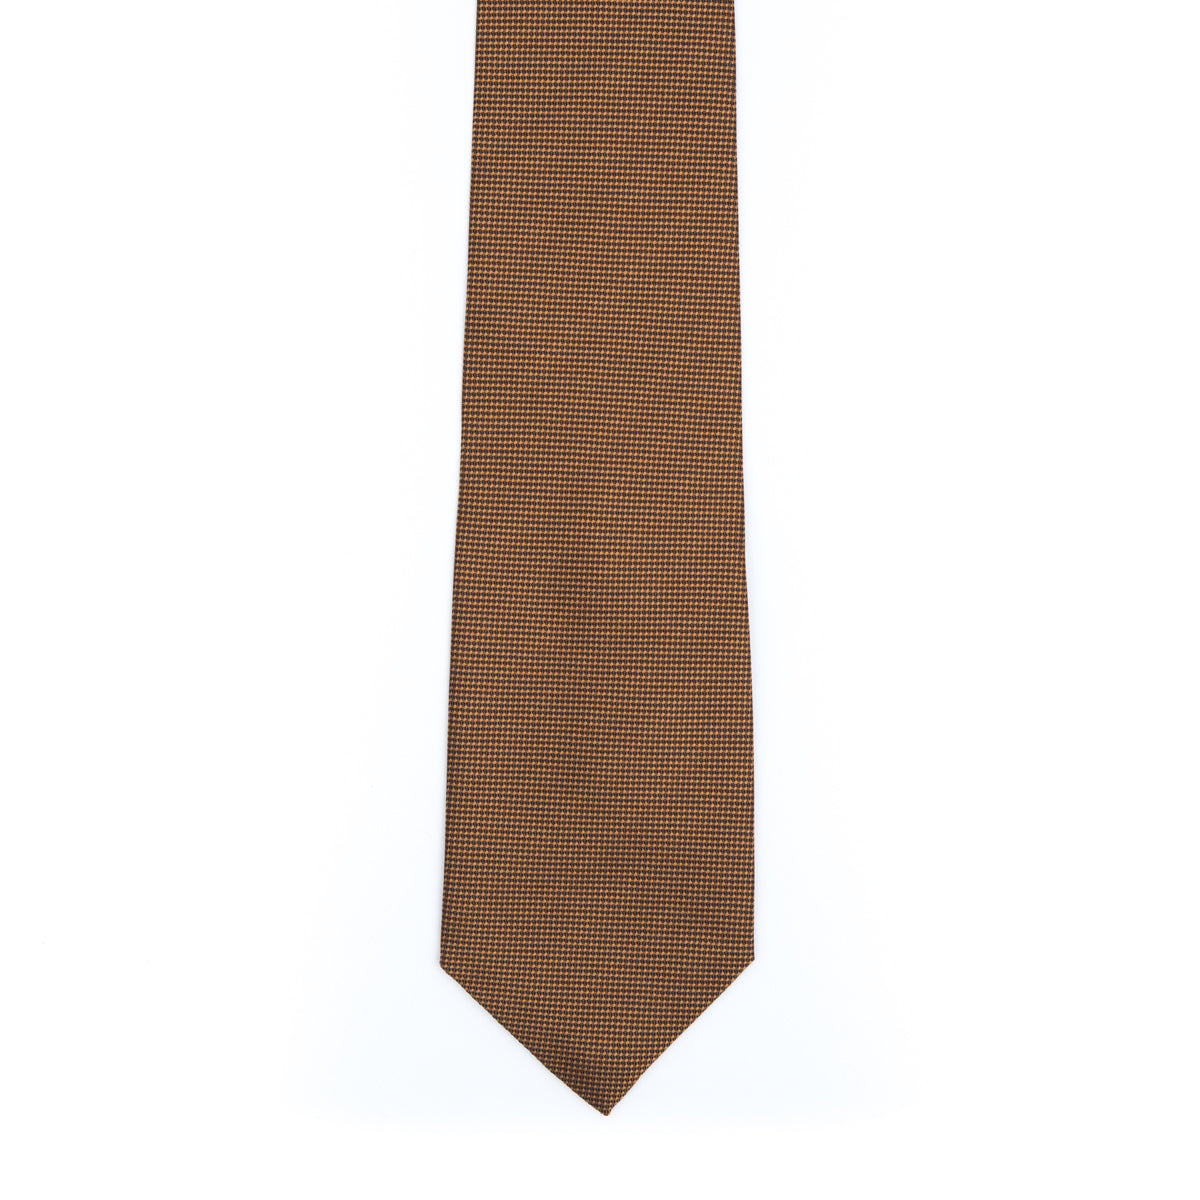 Corbata lisa marrón dorado